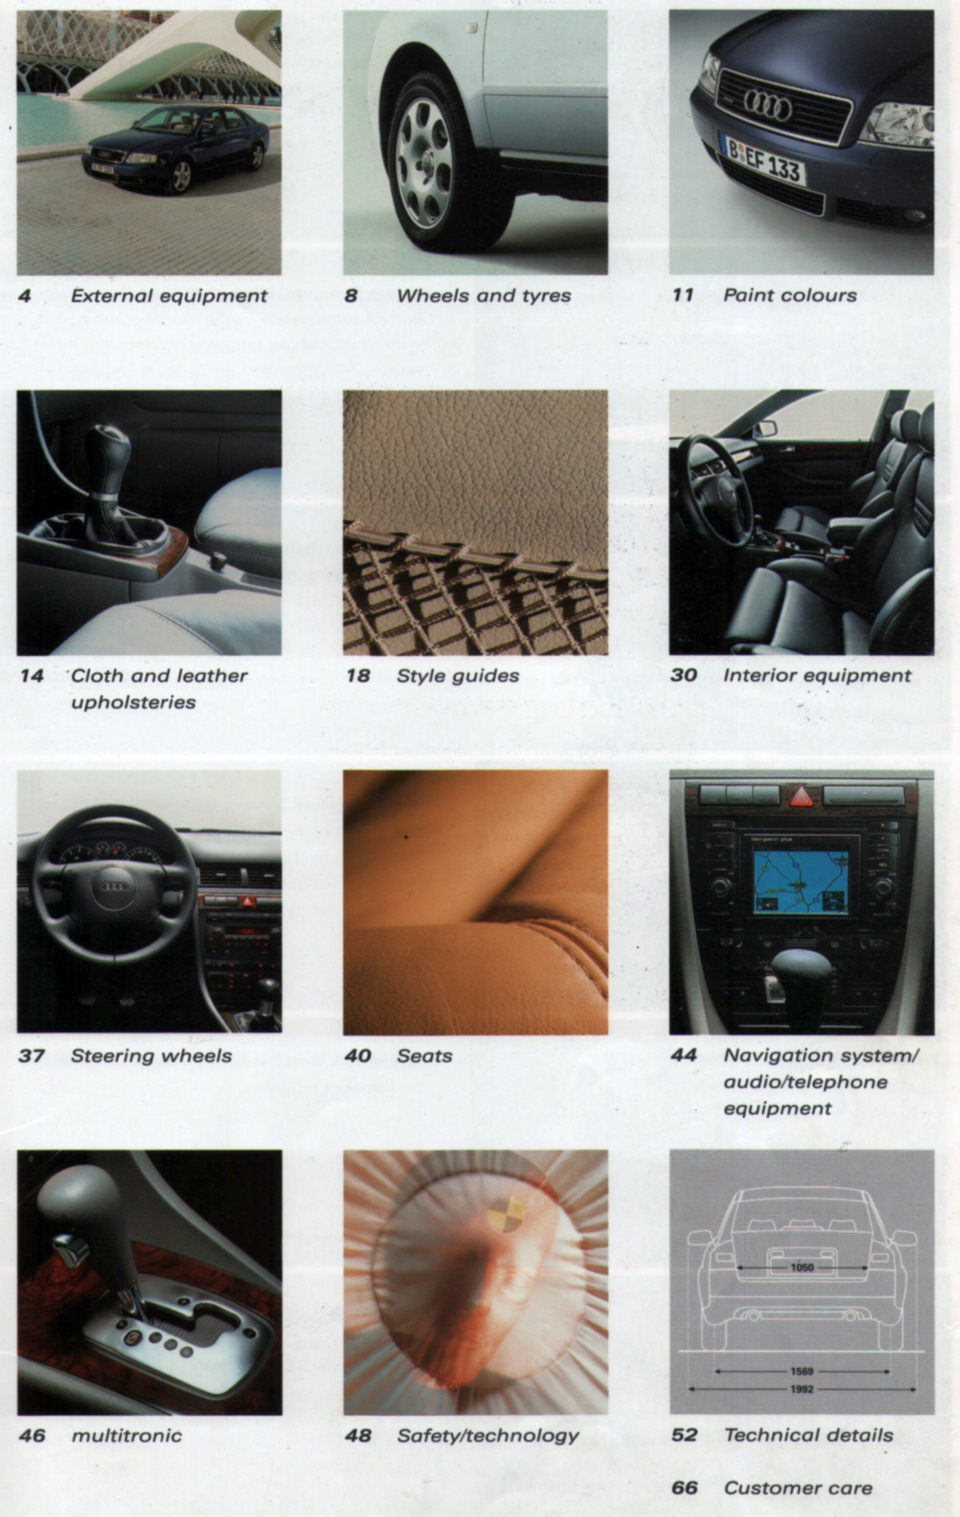 Prospekt / Katalog / Brochure Audi A6 (C6) Limousine und Avant Zubehör  03/05